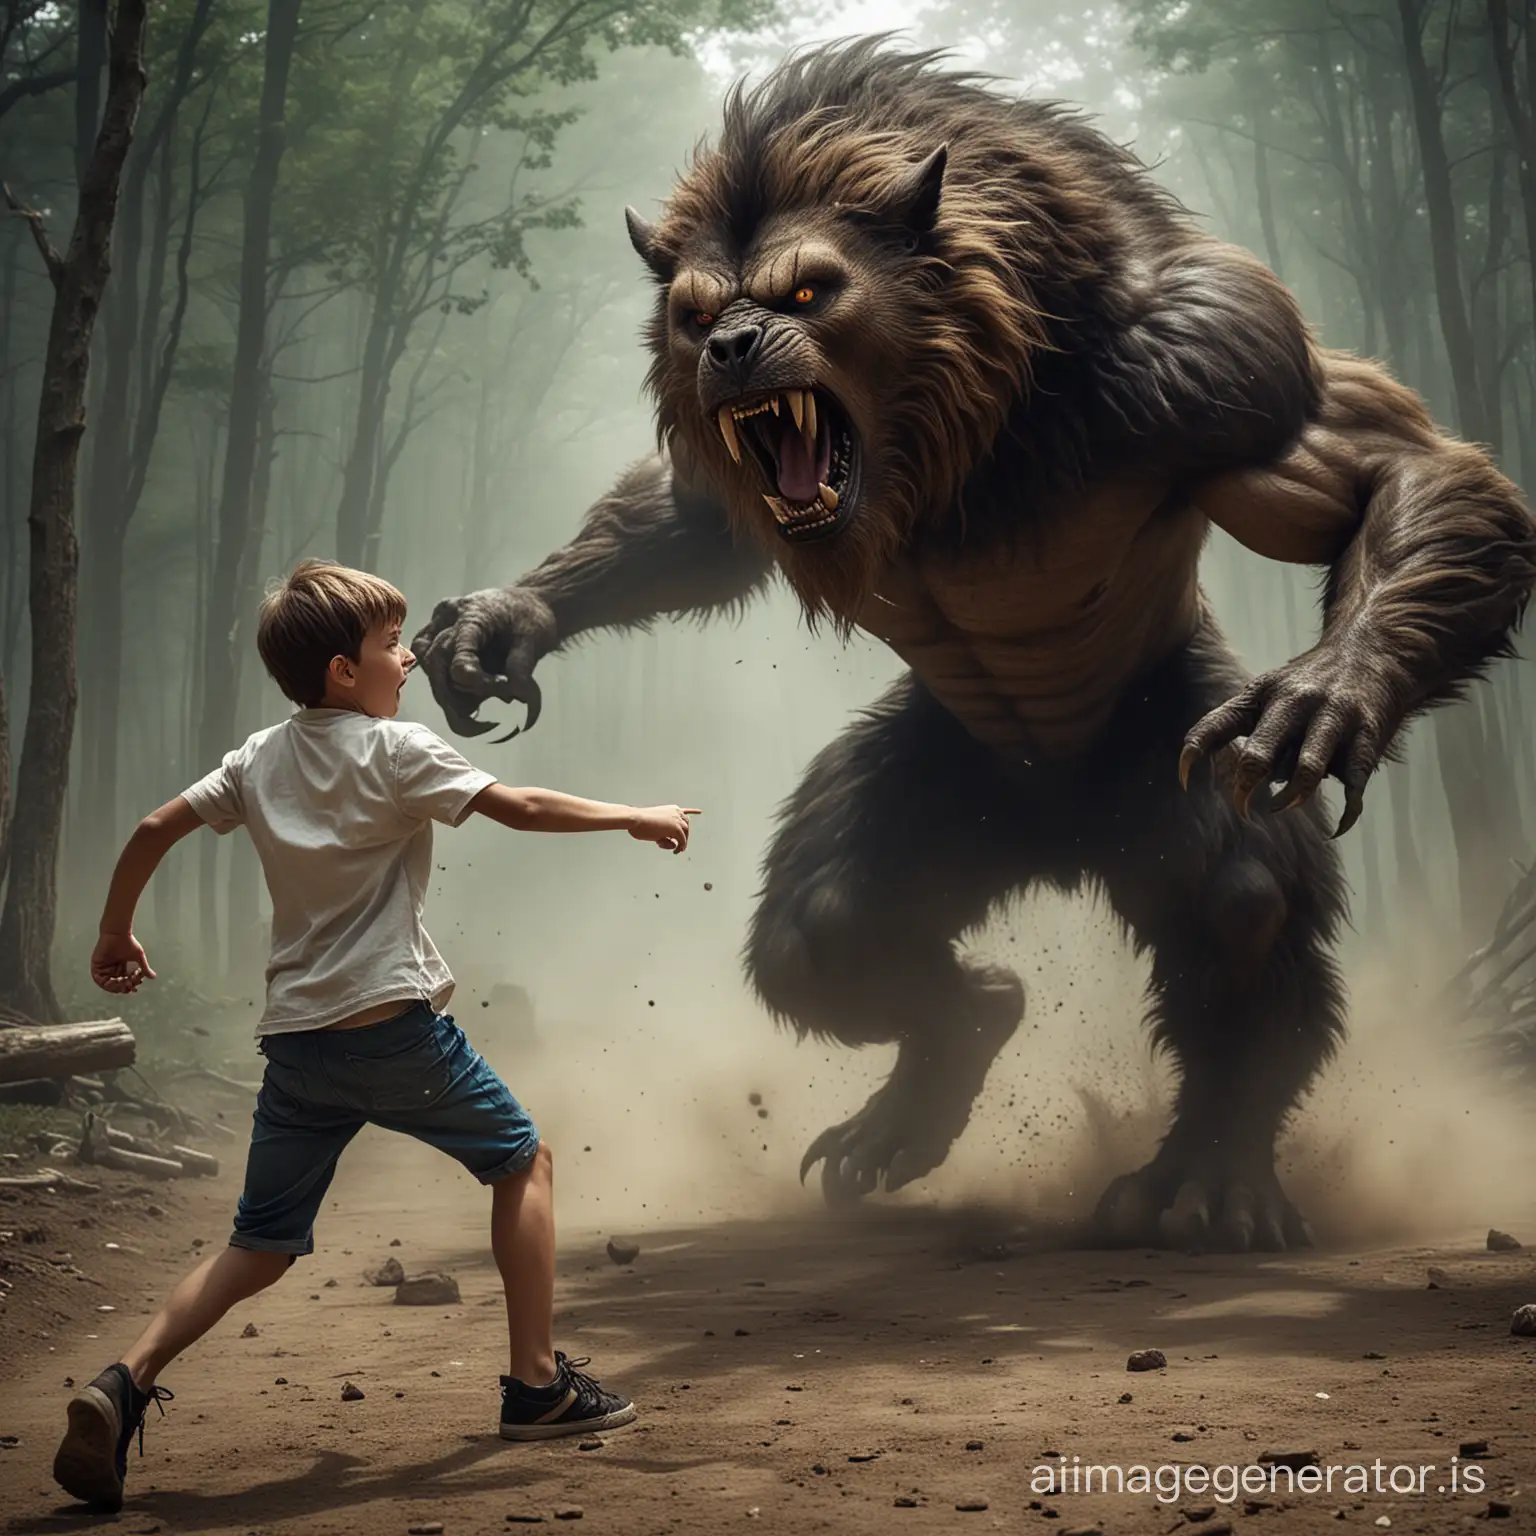 Beast attacking a boy